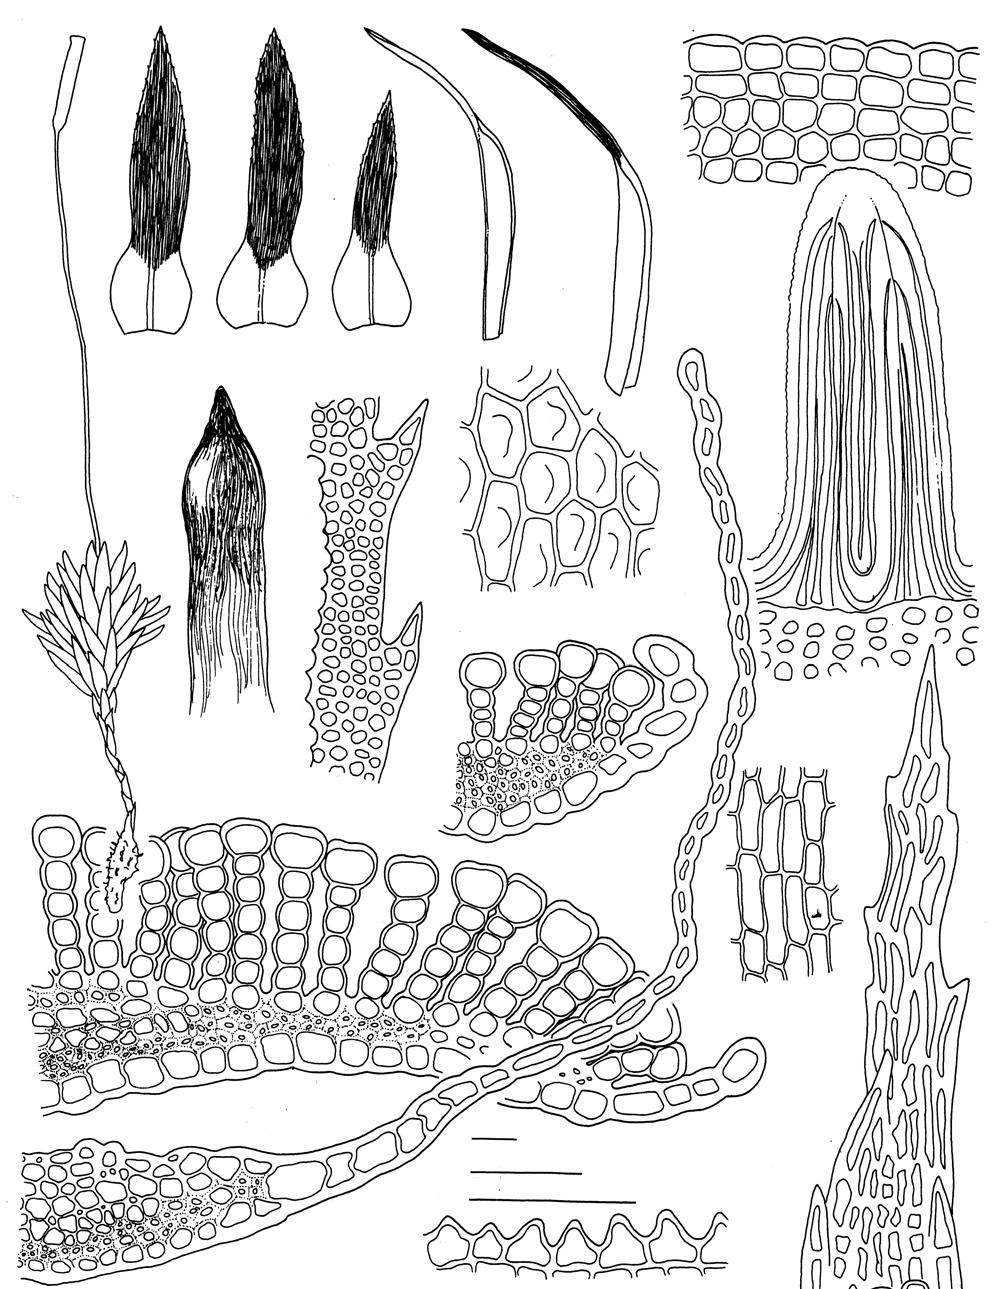 92 m b c d e f n a p q h j i k 100 µm, b-f, p l 500 µm, a 100 µm, g-o, q o g Figura 25. Pogonatum perichaetiale (Mont.) A. Jaeger subsp. oligodus (Kunze ex Müll. Hal.) Hyvönen. a. gametófito feminino, b-d.